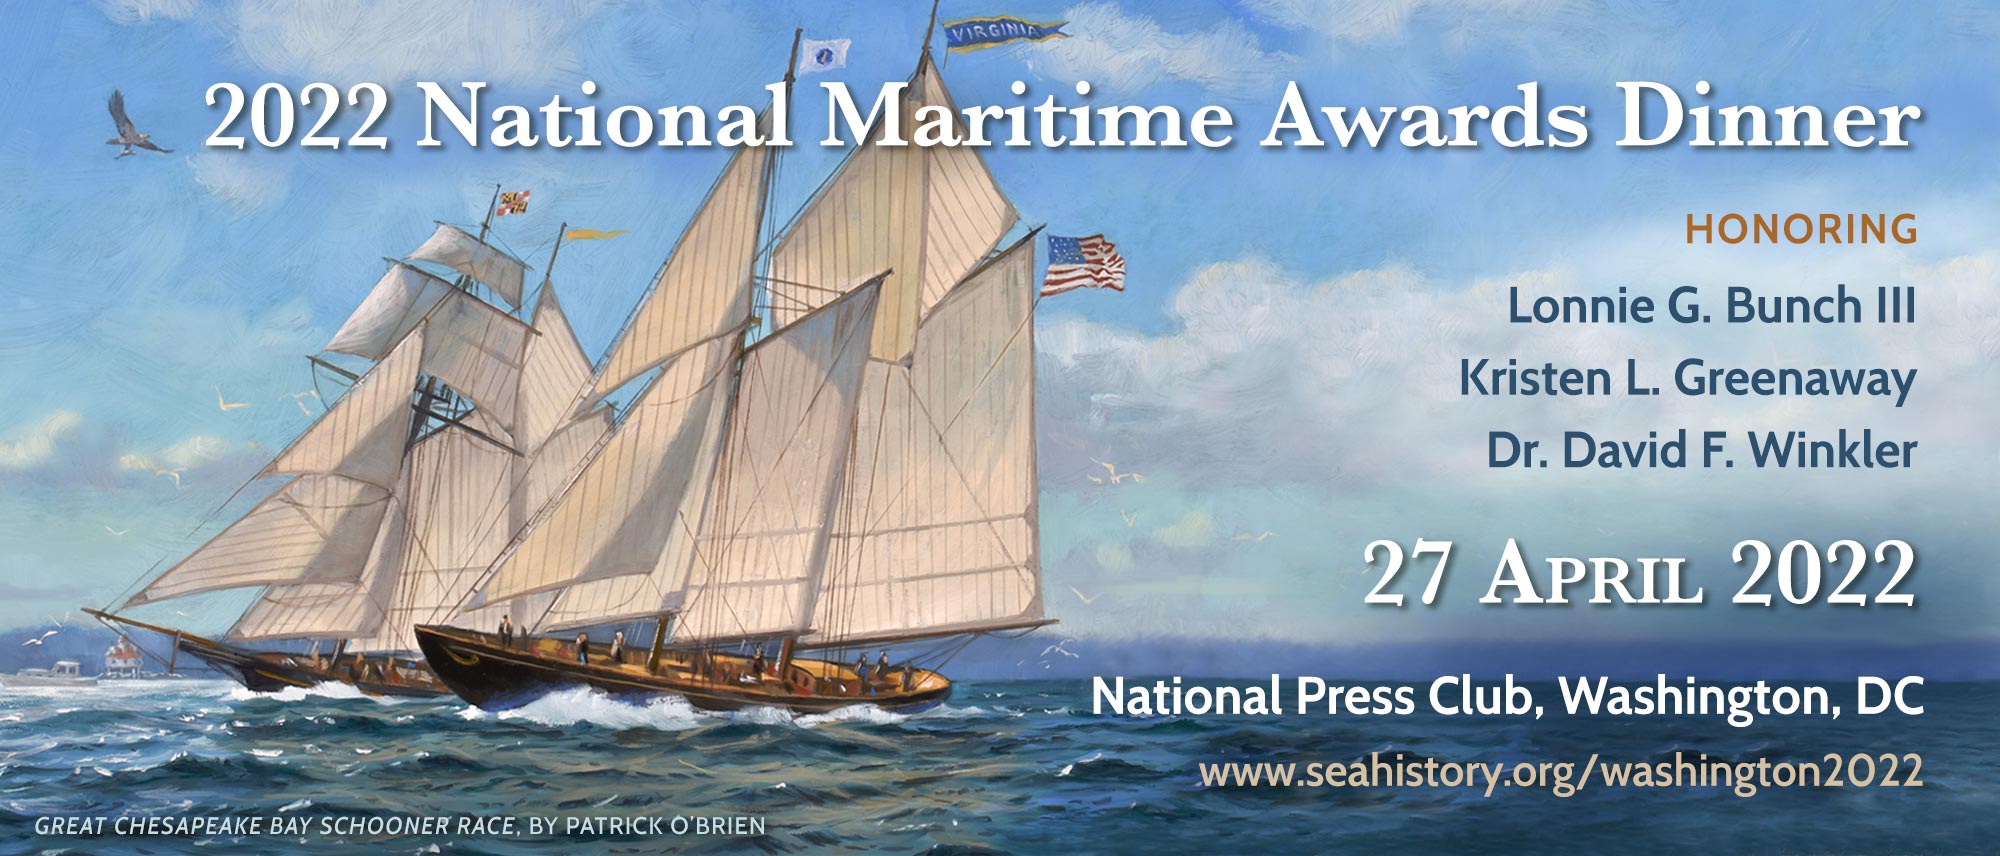 National Maritime Awards Dinner – 27 April 2022